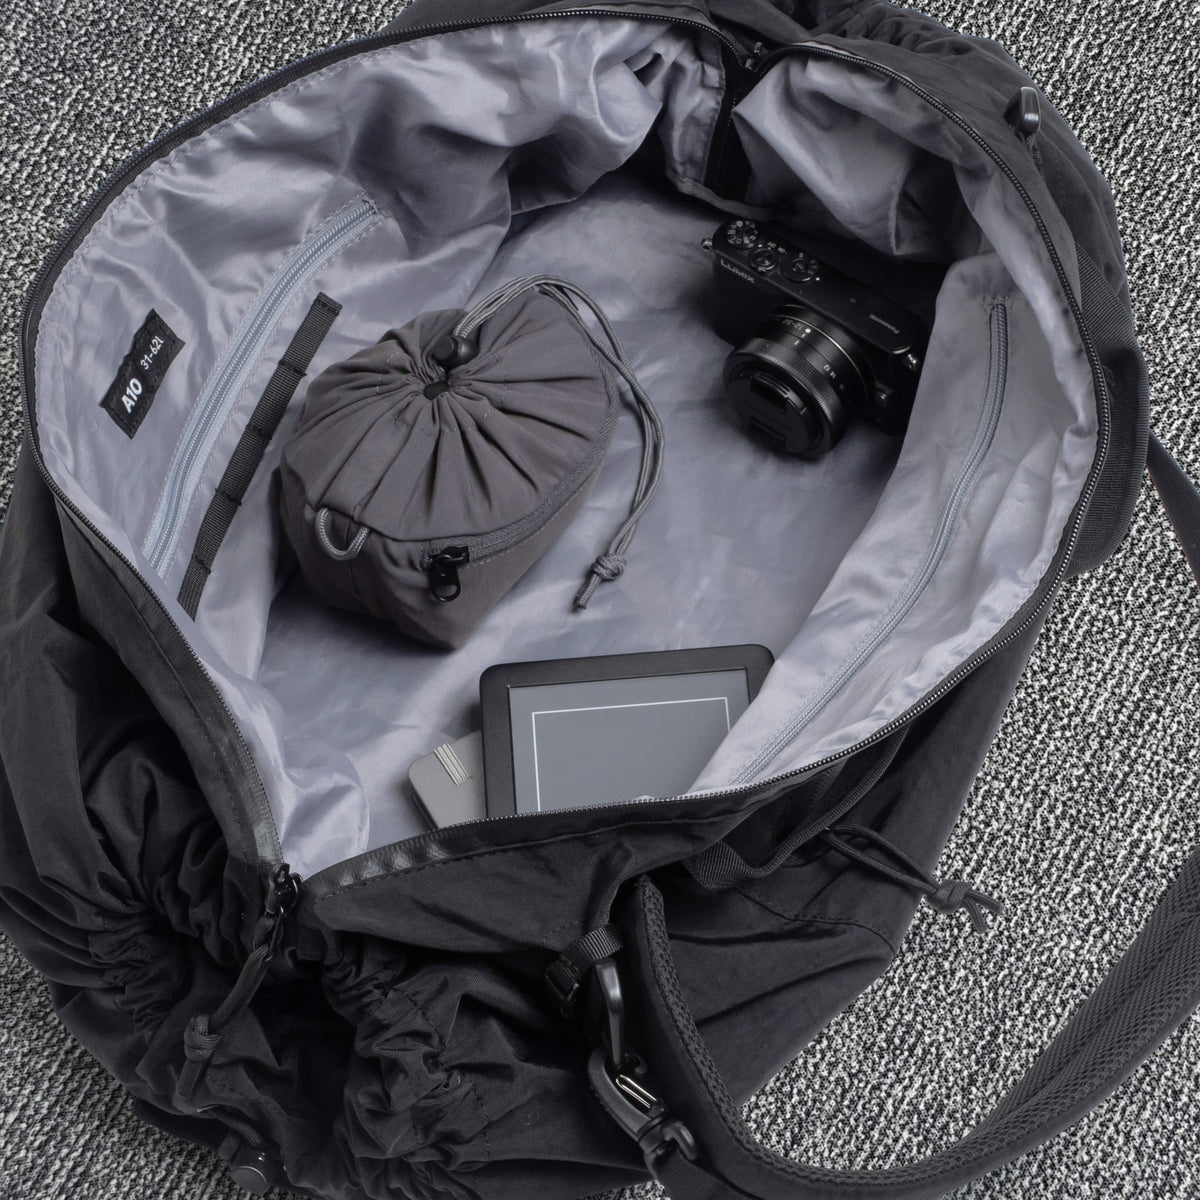 The Adjustable Bag A10 - Black – Piorama